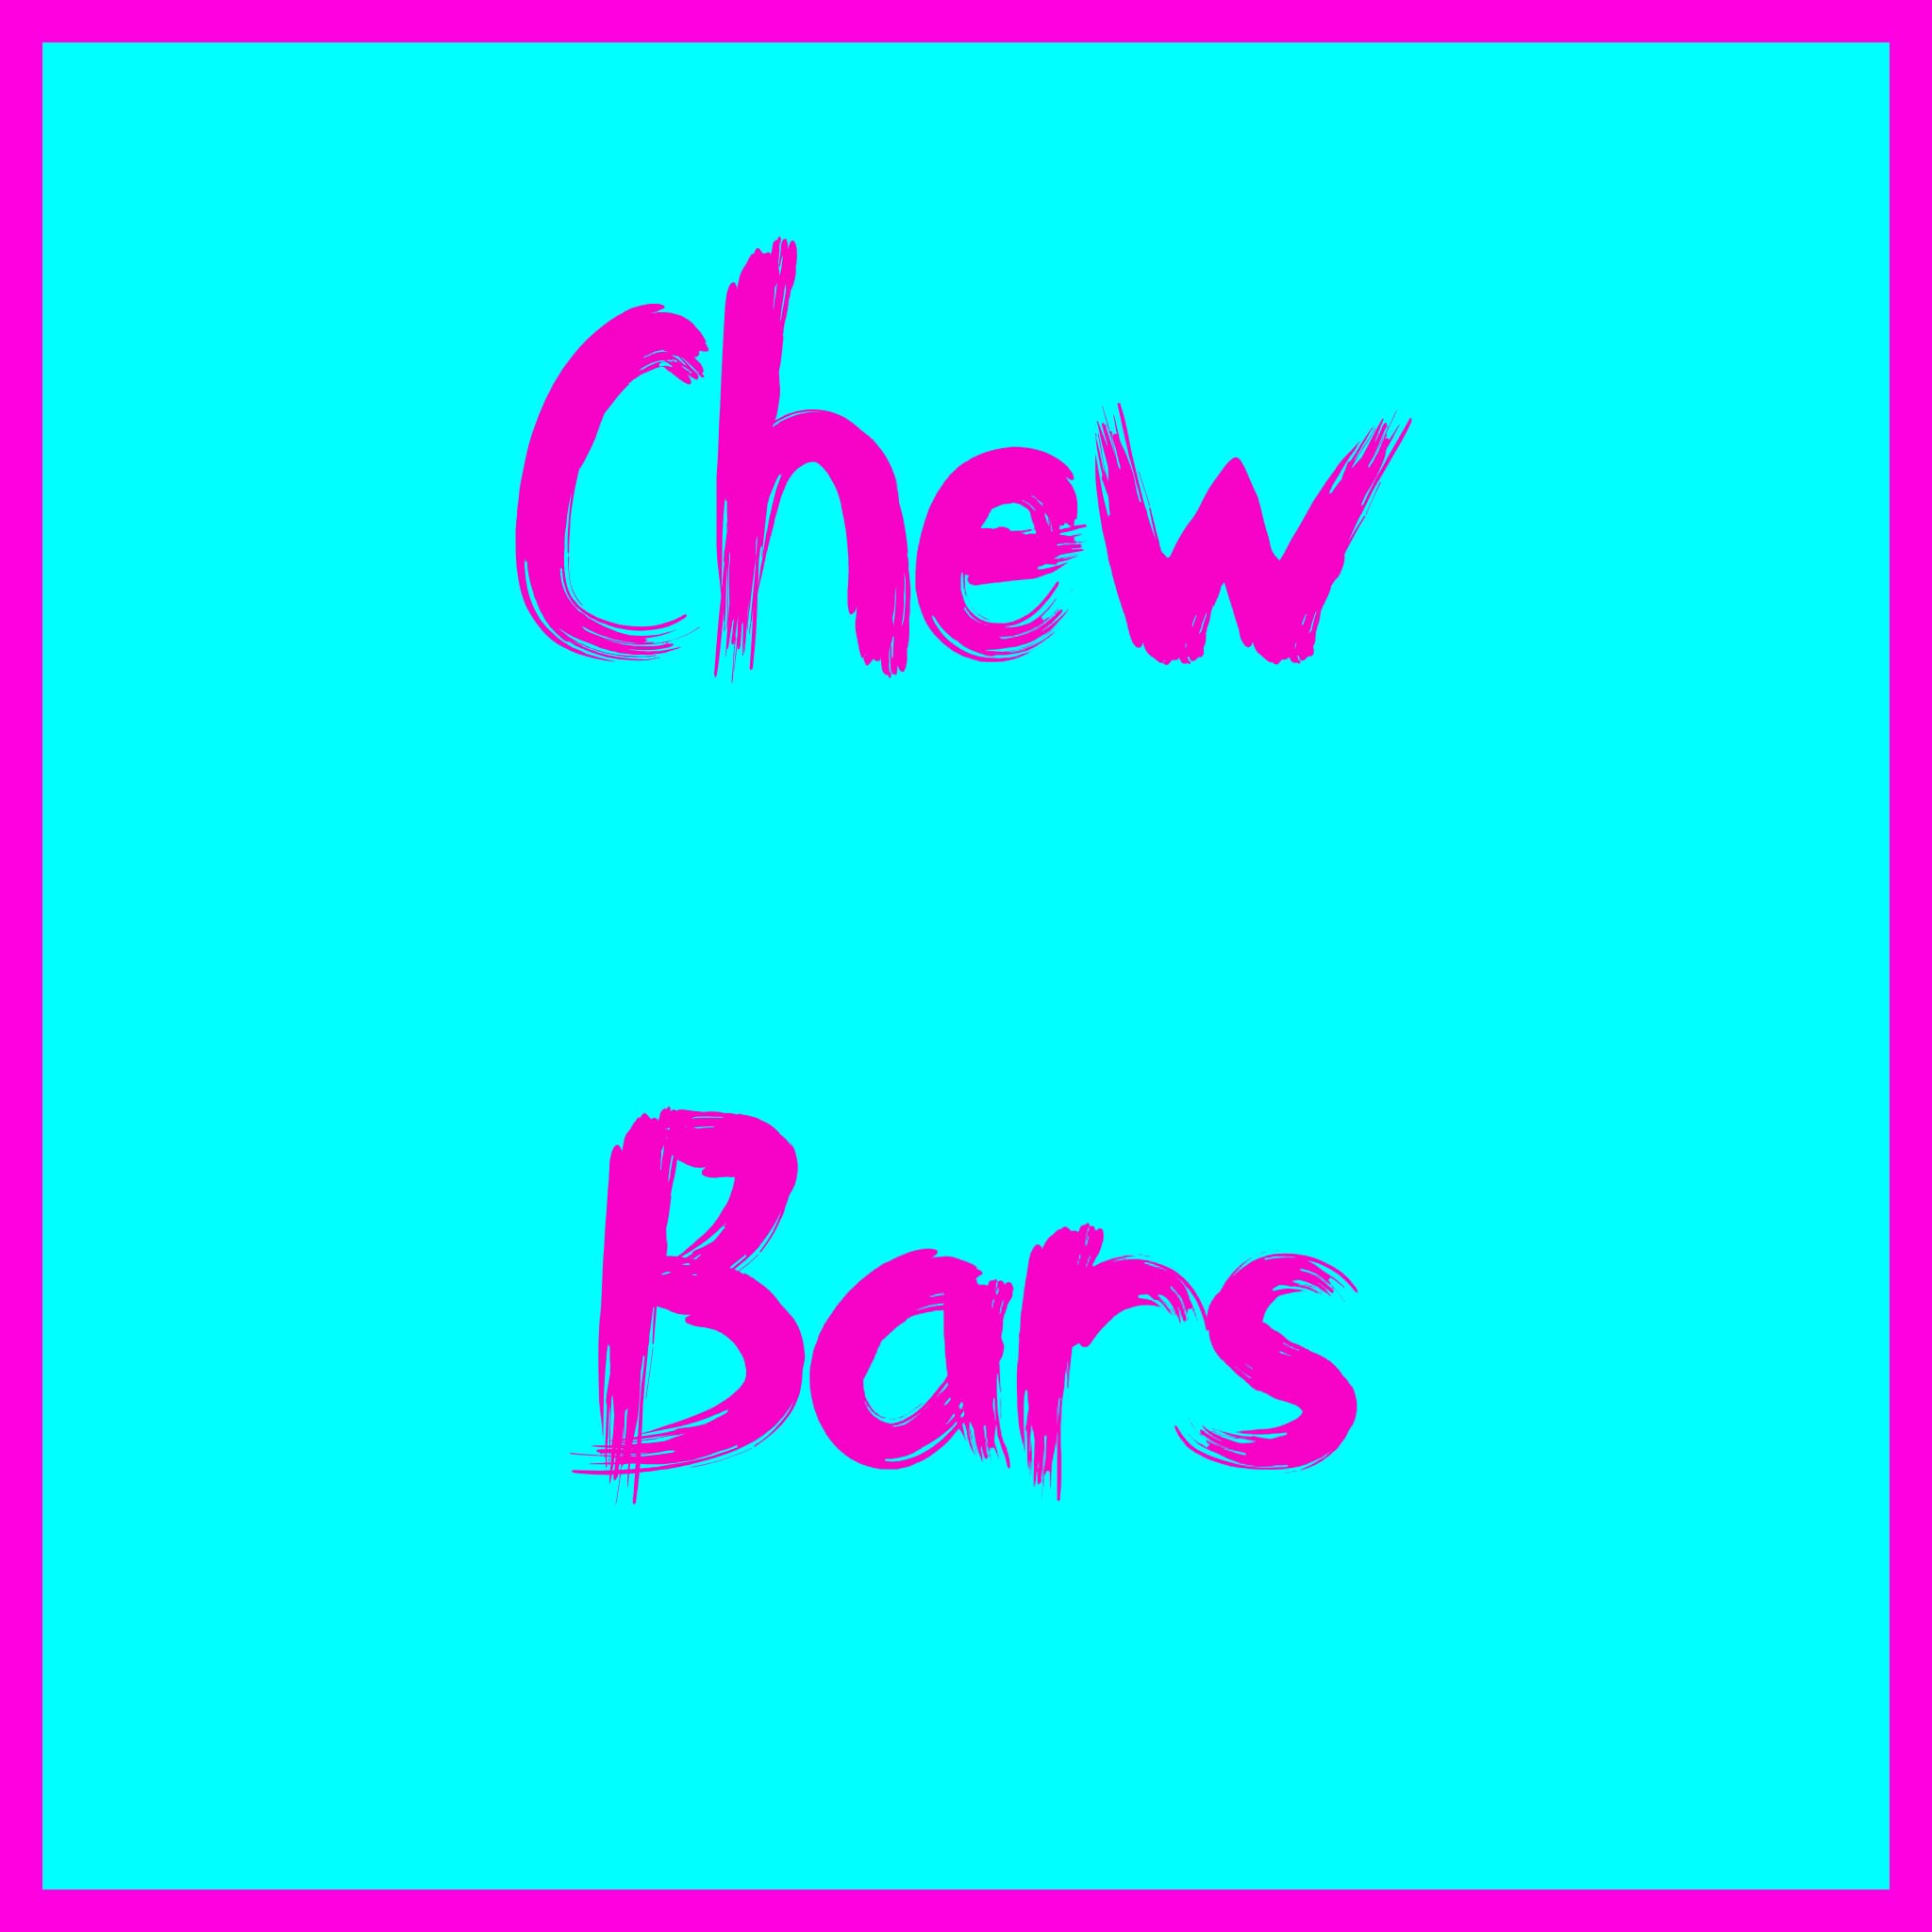 Sweet Sensations Chew Bars Clickable Image